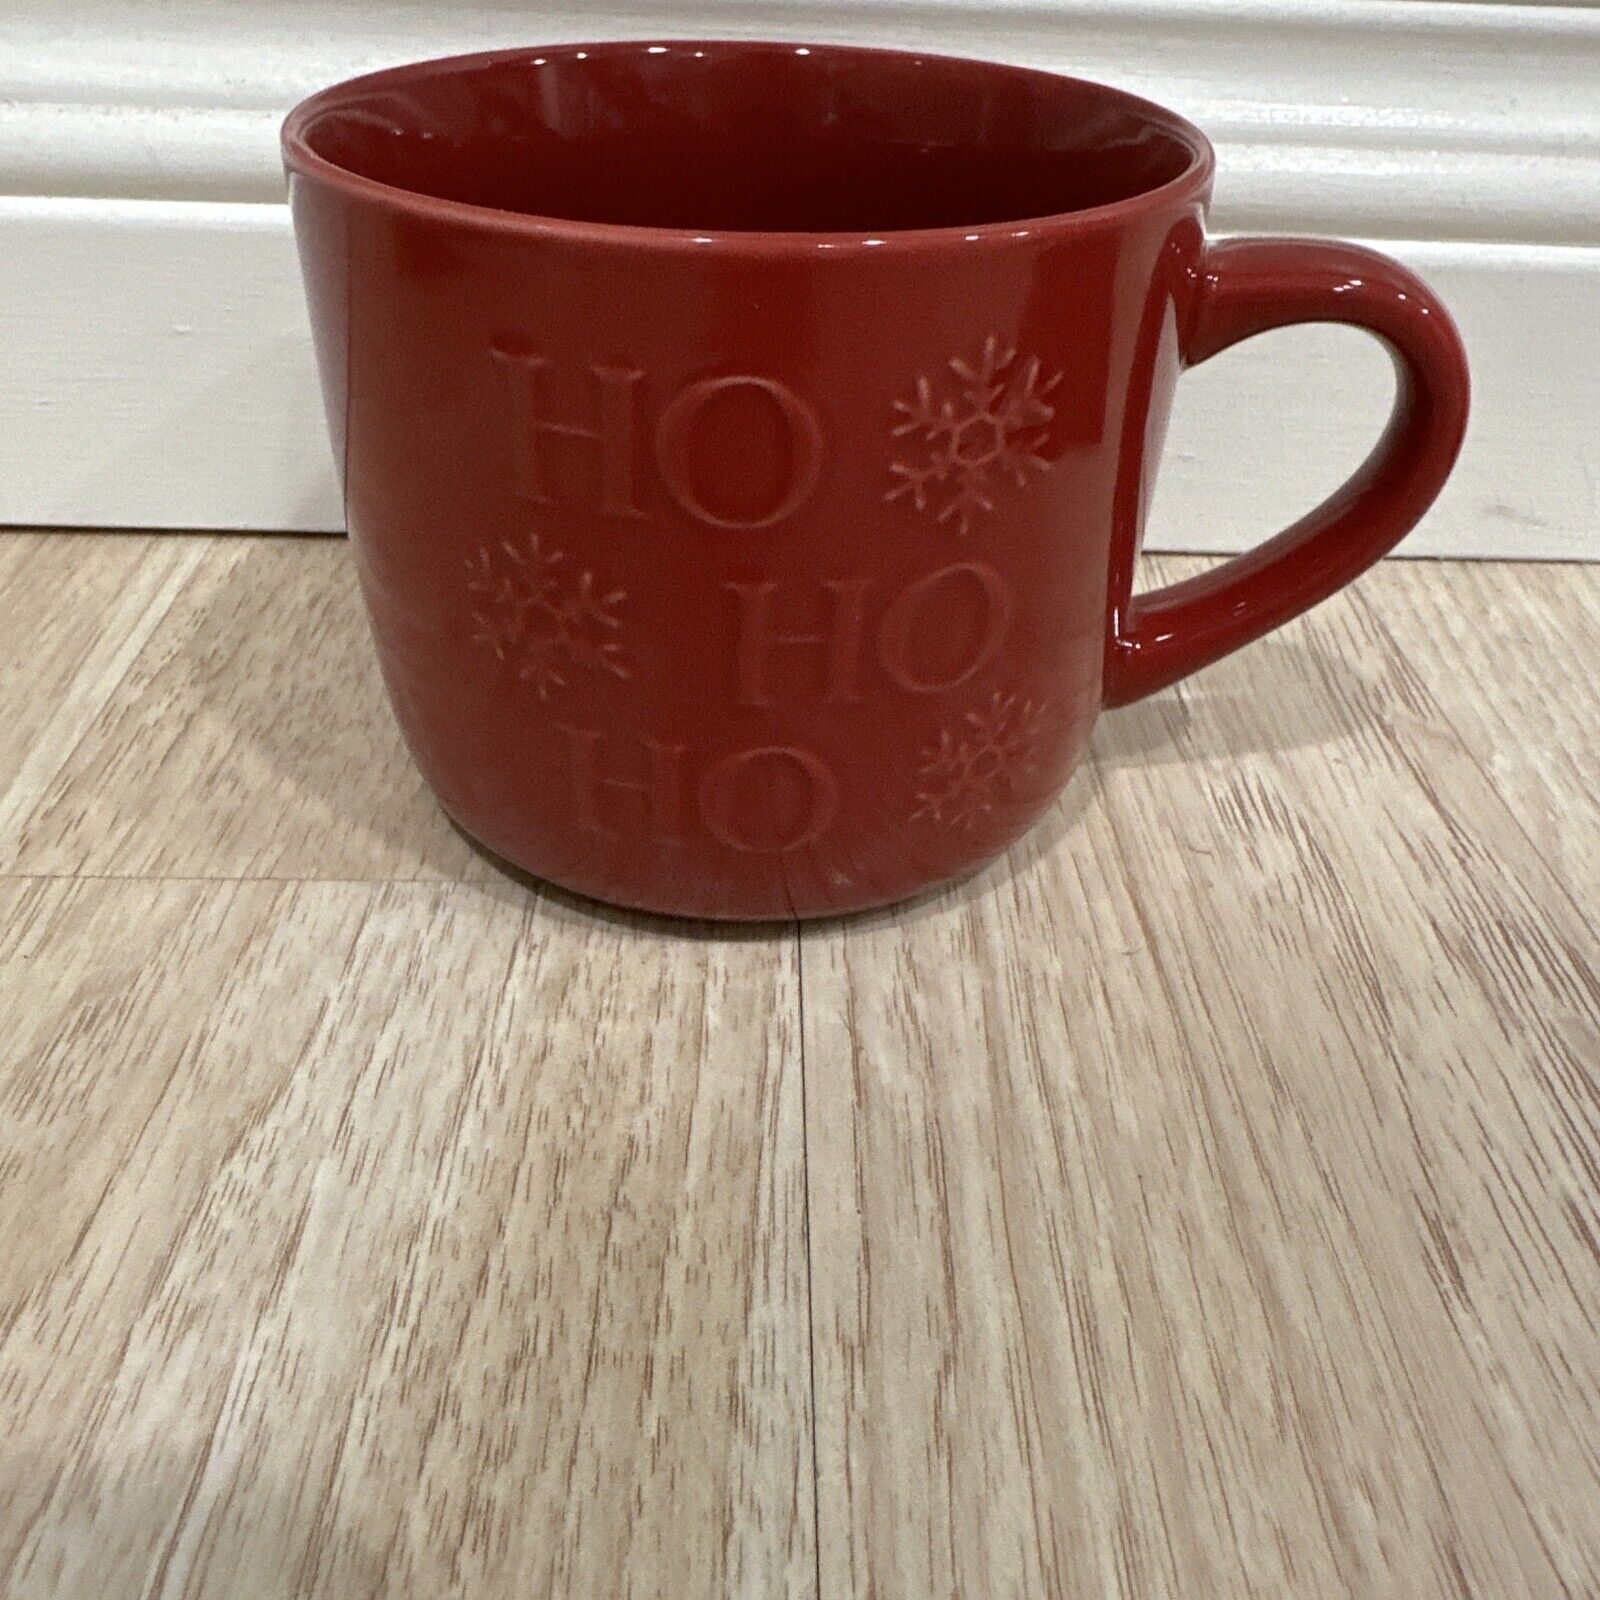 Threshold HO HO HO Red Holiday Mug, 16 oz Stoneware, New with tags NWOT